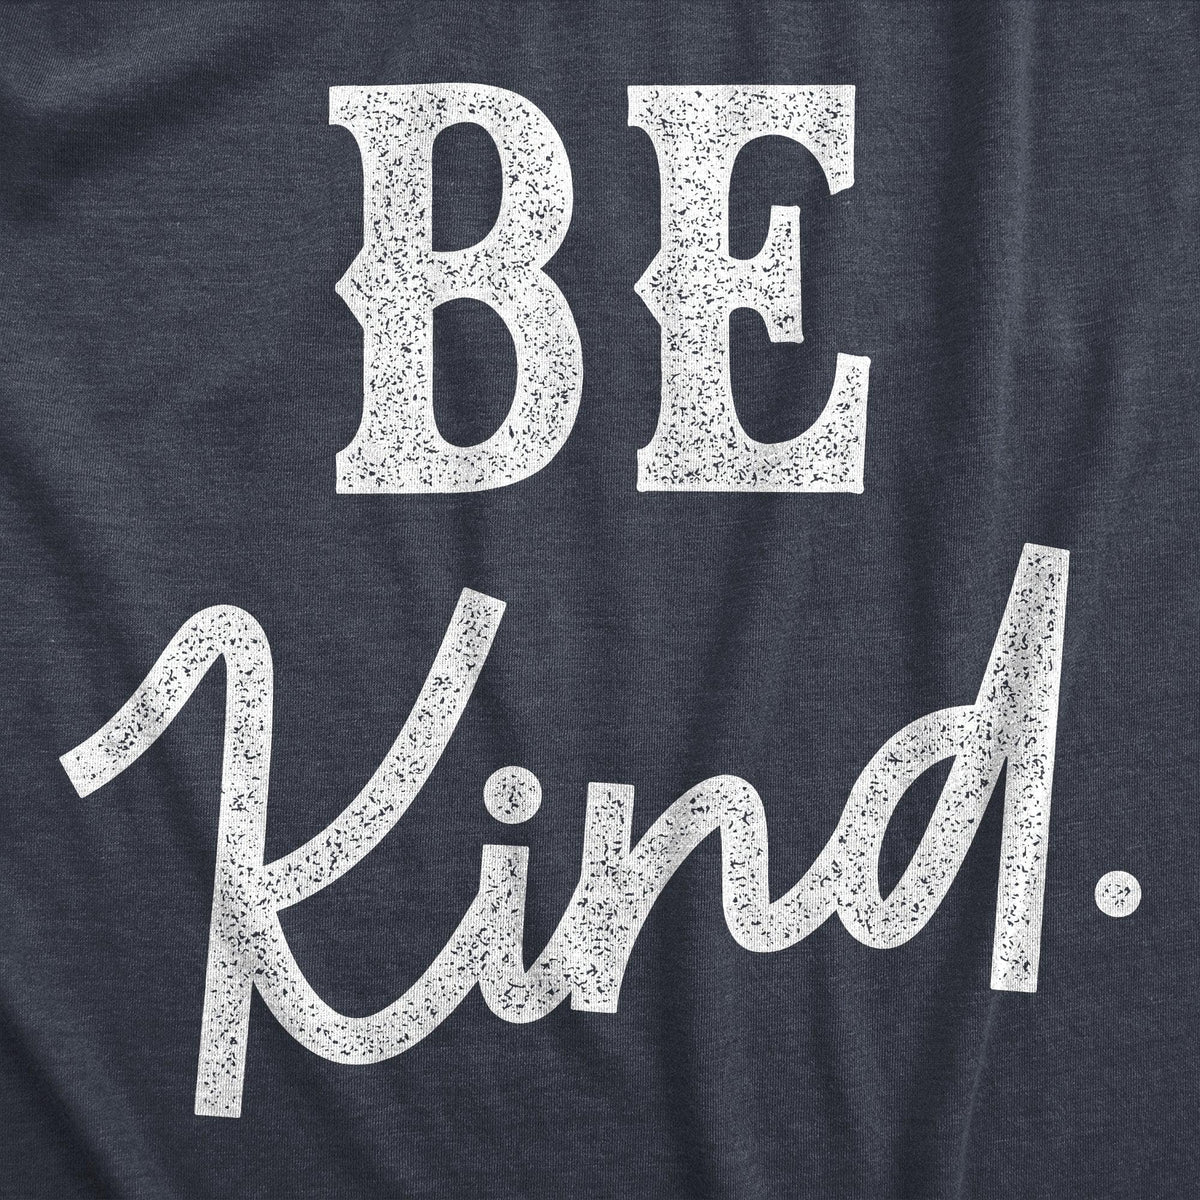 Be Kind Women&#39;s Tshirt  -  Crazy Dog T-Shirts